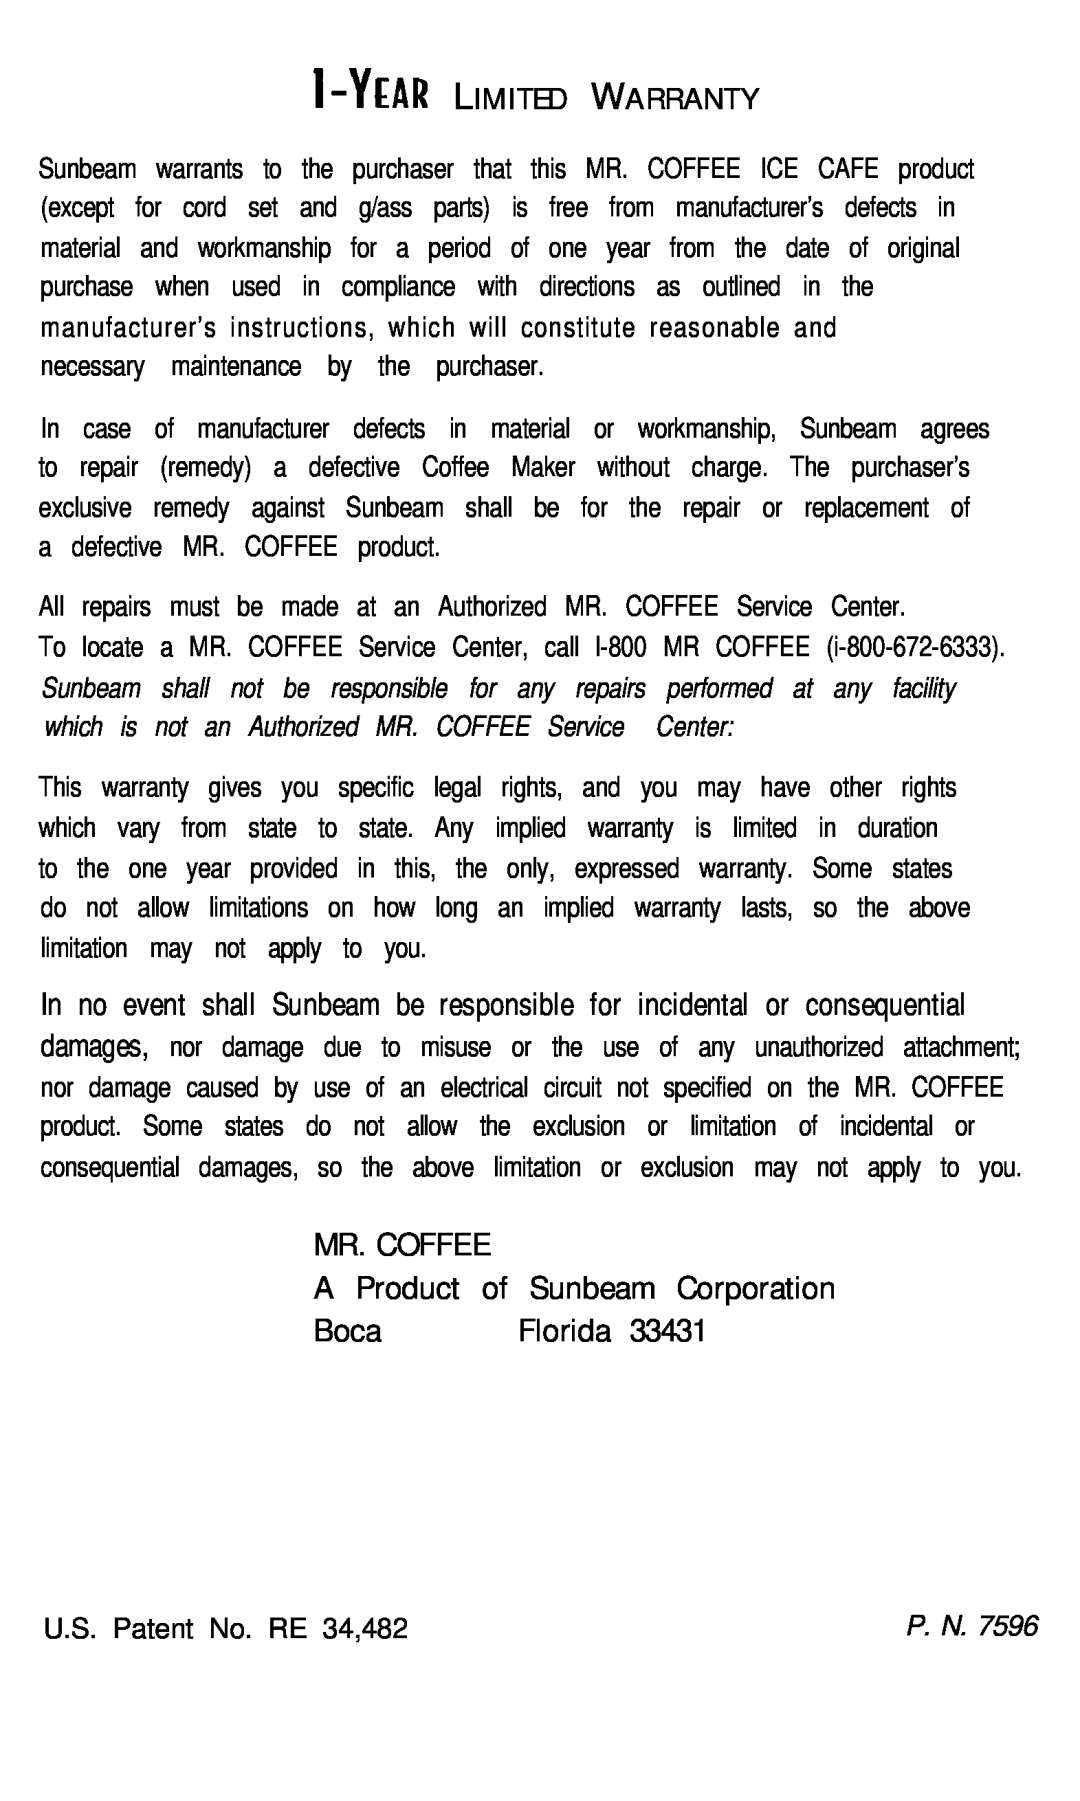 Mr. Coffee TM8D MR. COFFEE A Product of Sunbeam Corporation Boca Raton, Florida, U.S. Patent No. RE 34,482, P. N 